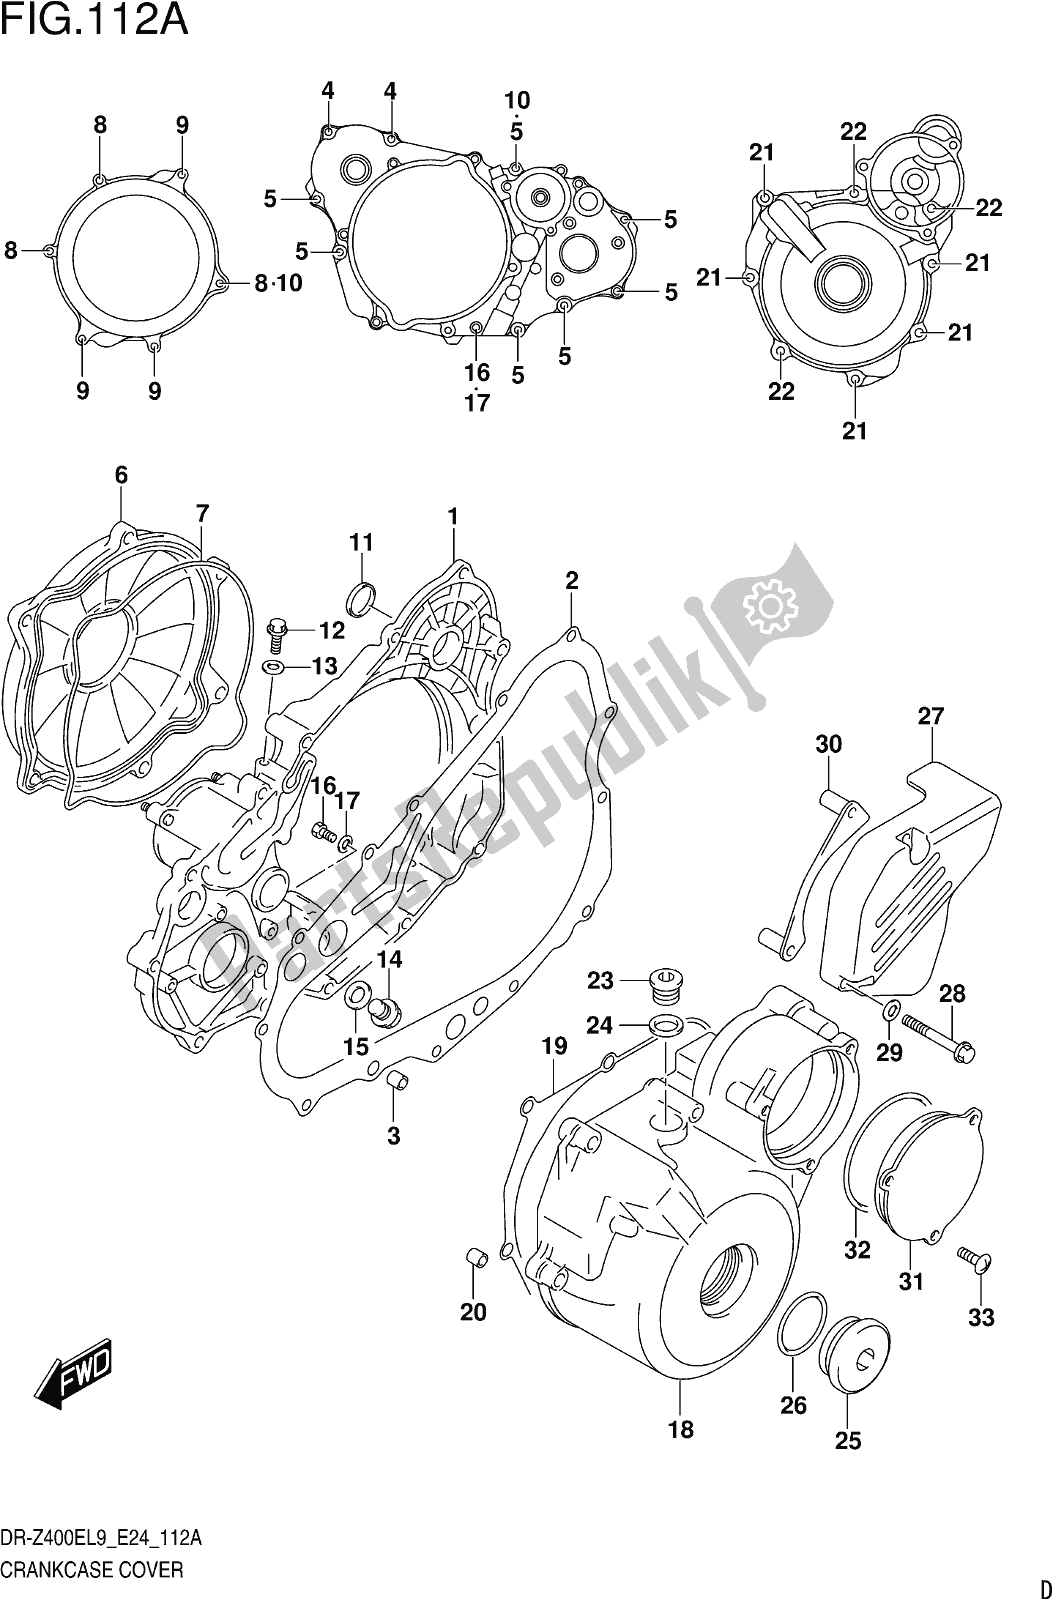 All parts for the Fig. 112a Crankcase Cover of the Suzuki DR-Z 400E 2019